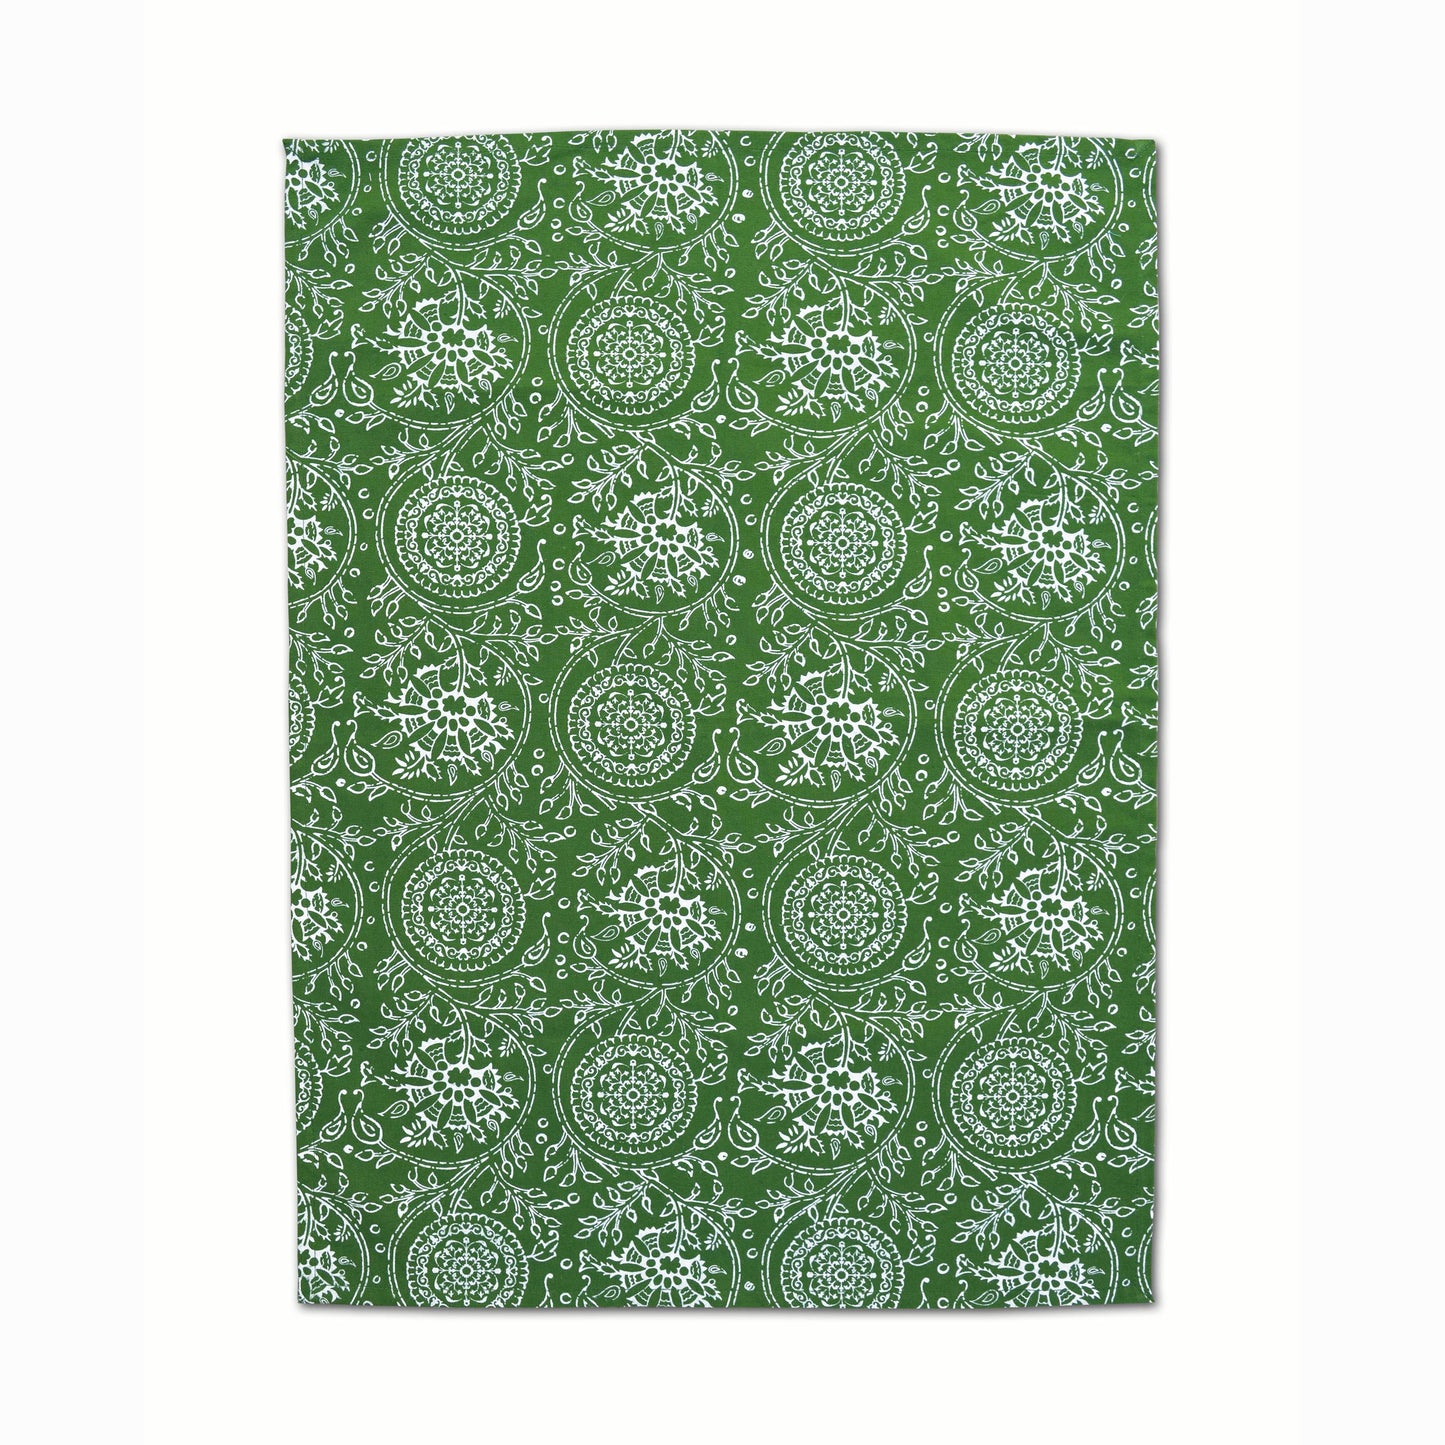 KALAMKARI Green Kitchen Towel, floral print, Indian ethnic, printed Tea Towel, 100% cotton, size 20X28 inches